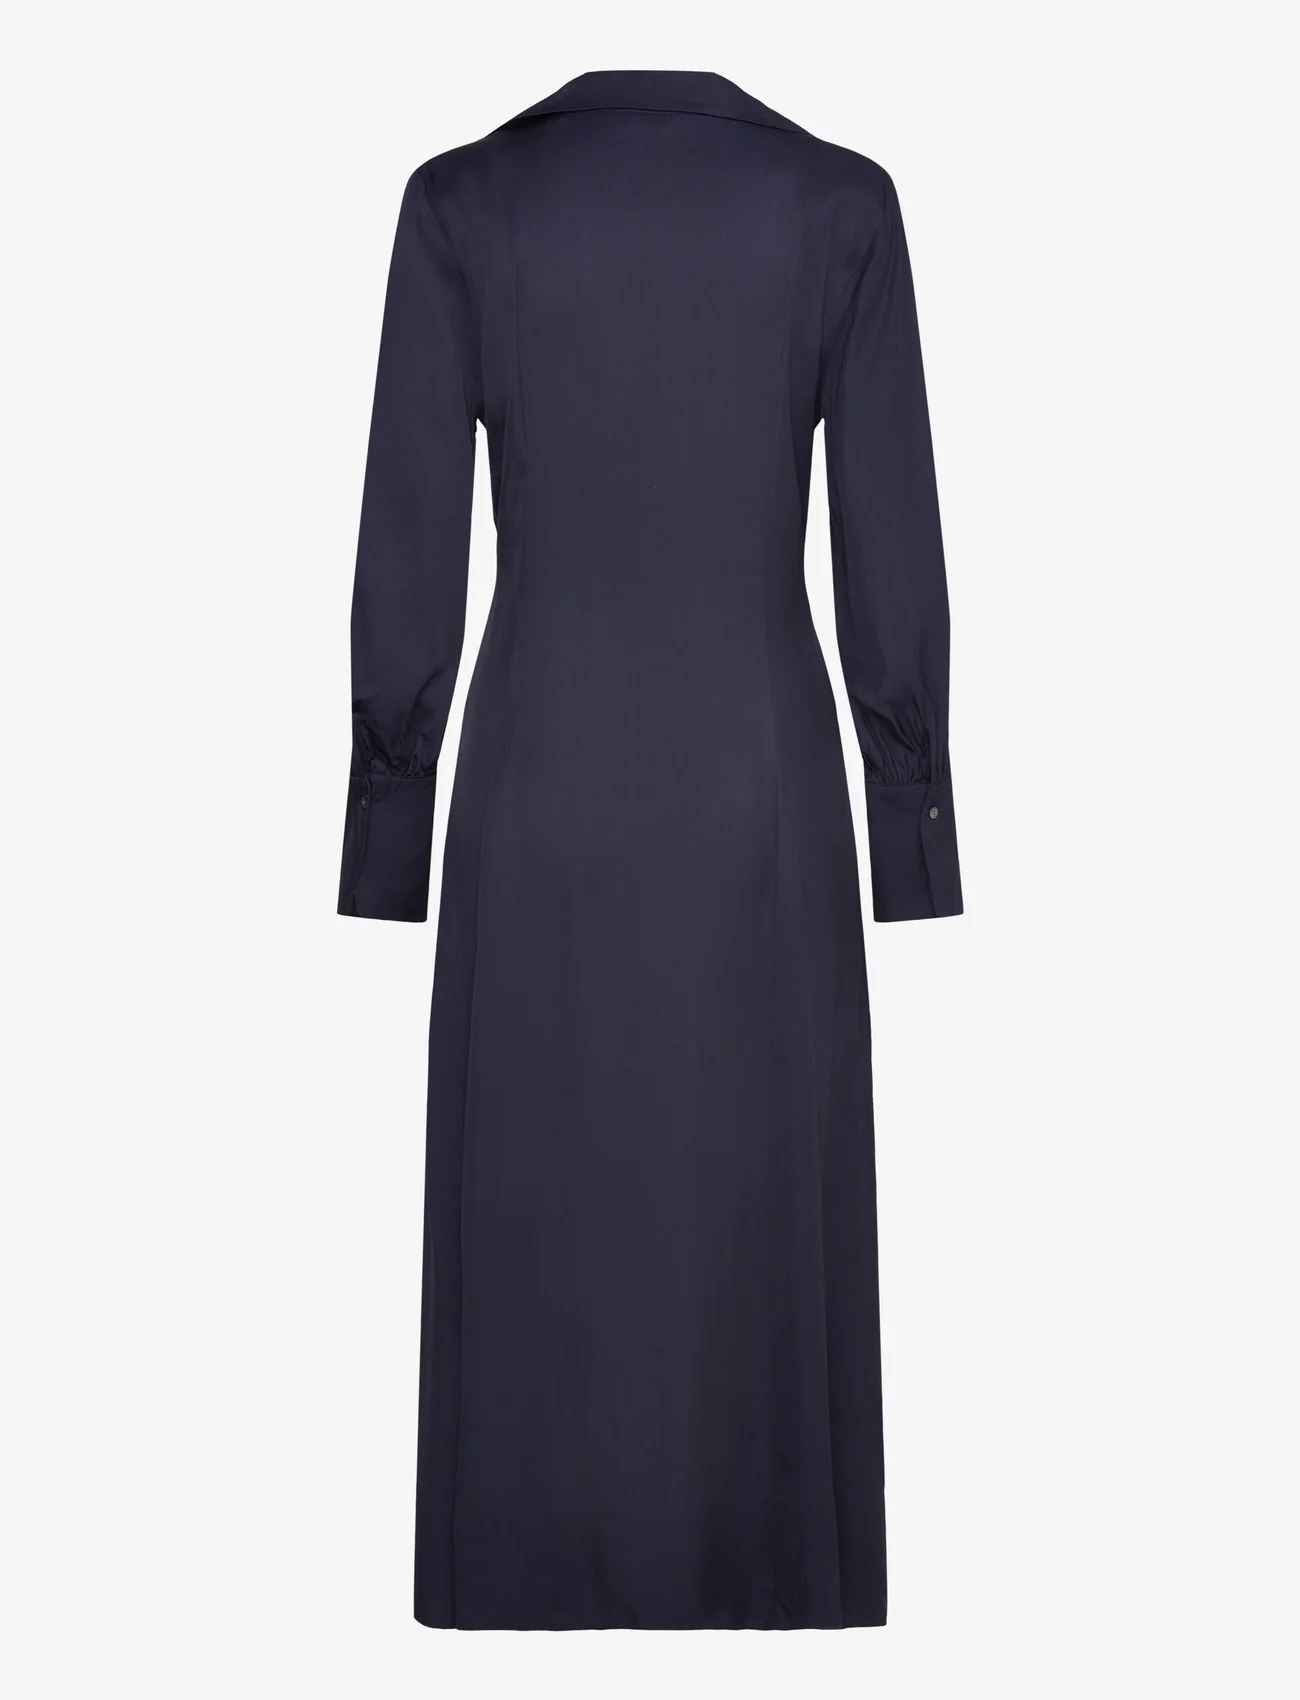 GANT - SLIM HIGH CUFF DRESS - midi kjoler - evening blue - 1